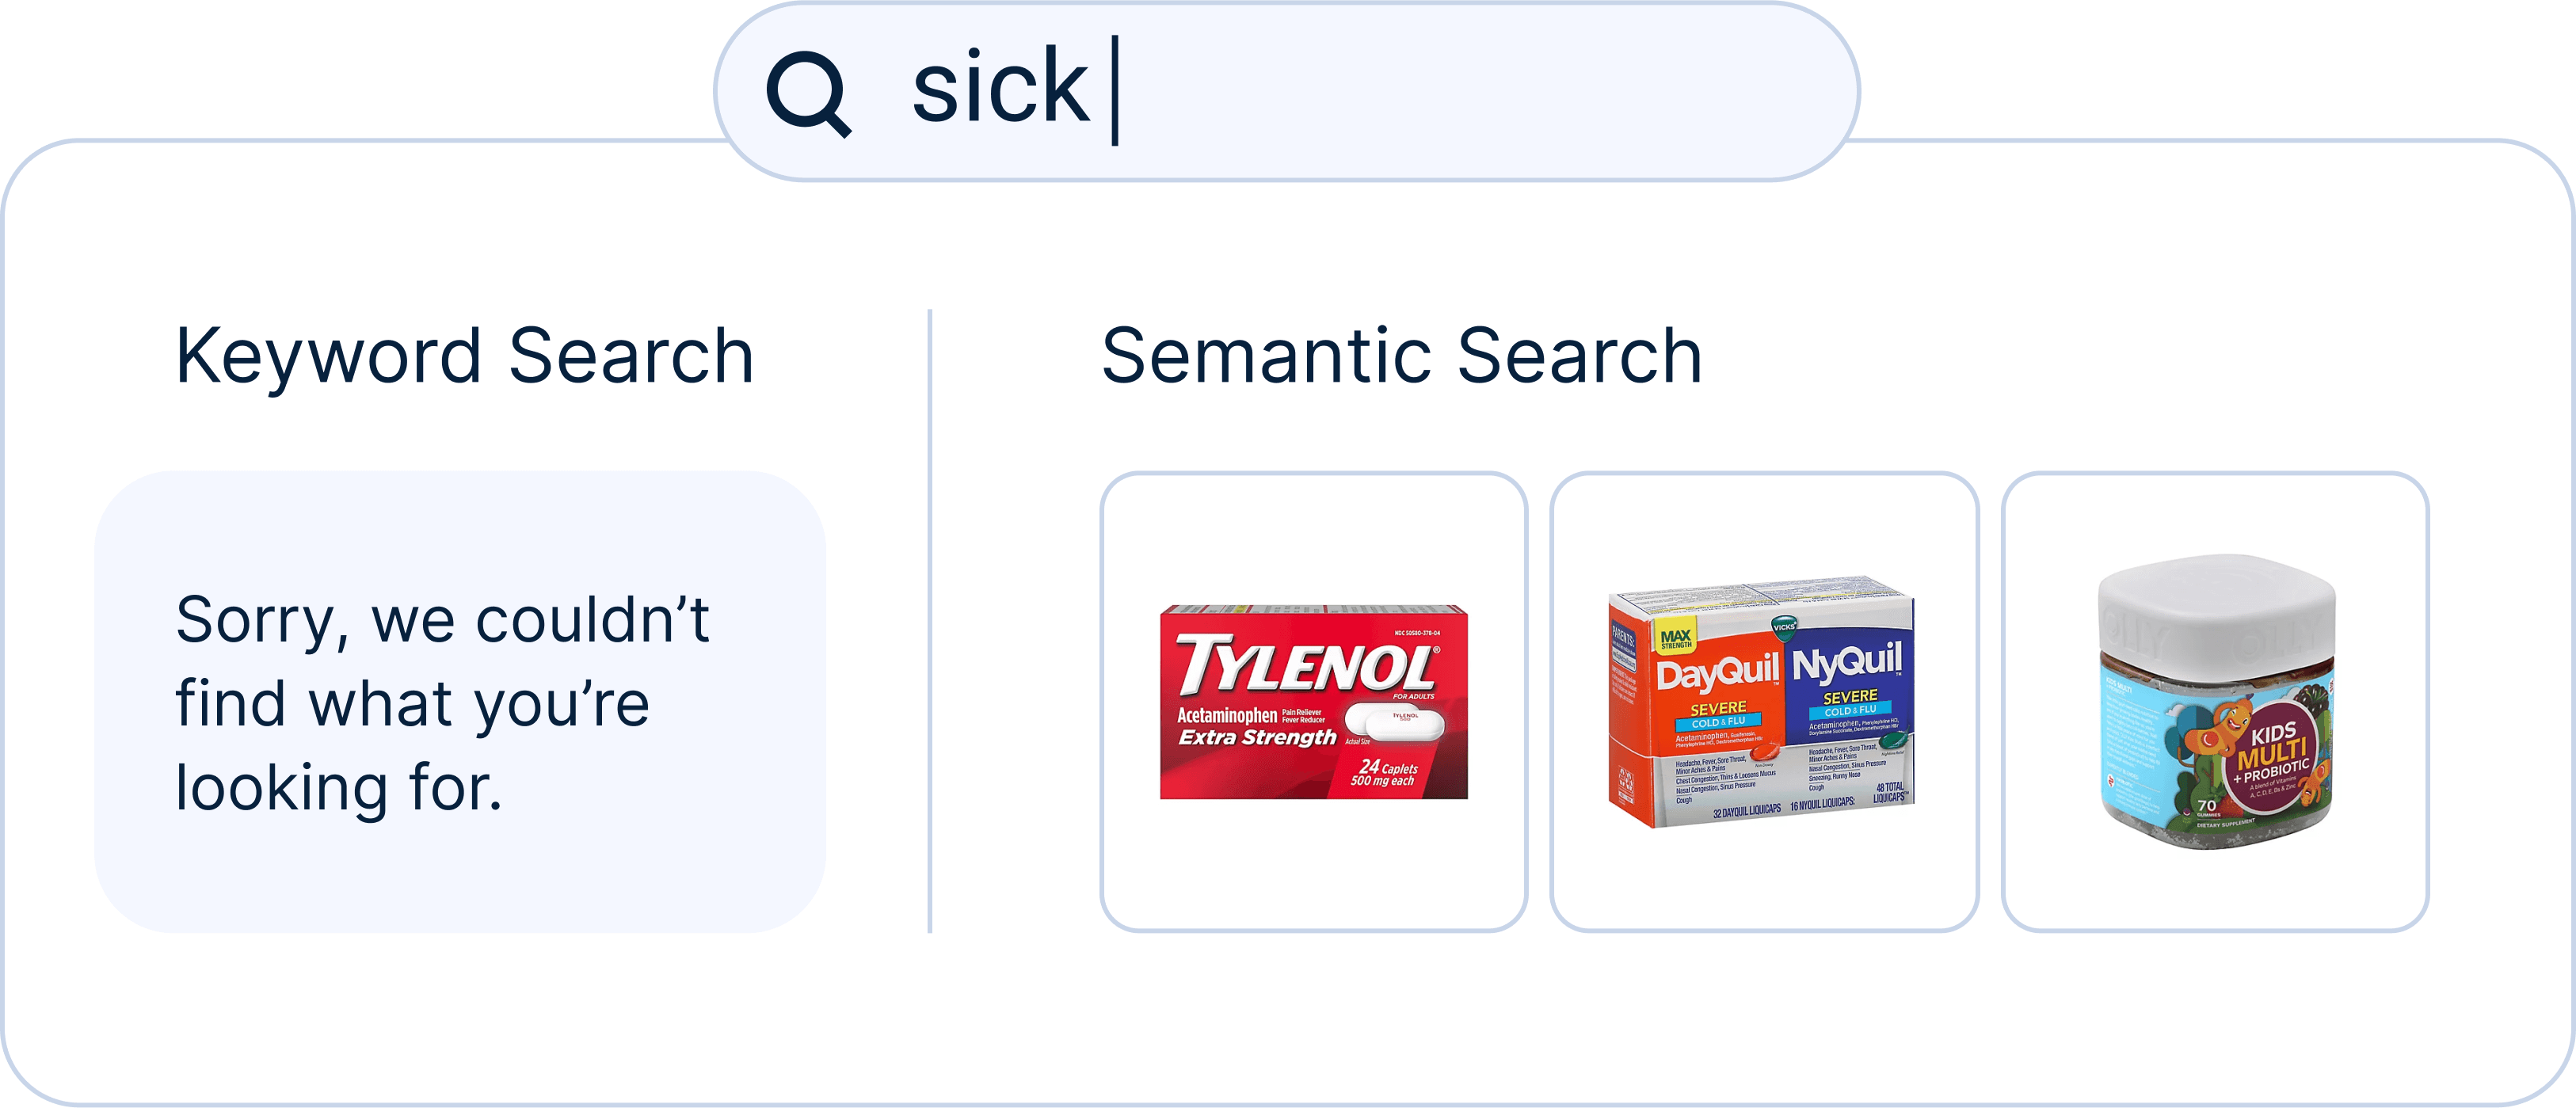 semantic_search_sick.png